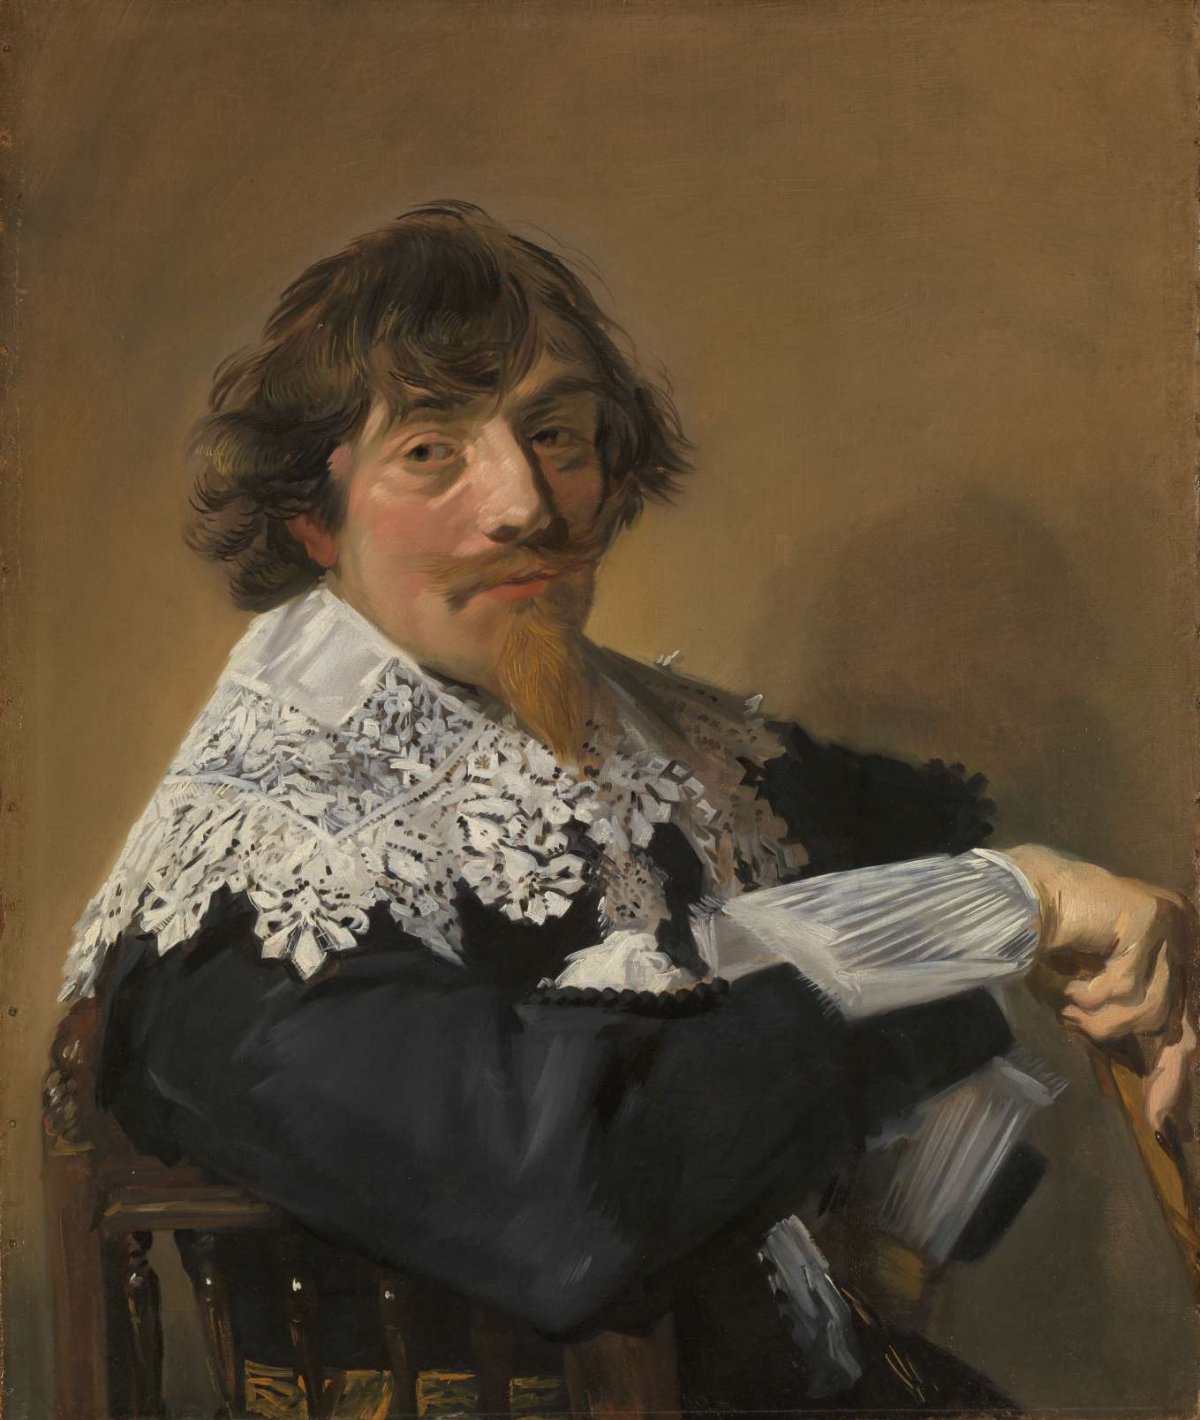 Portrait of a Man, Frans Hals, c. 1635